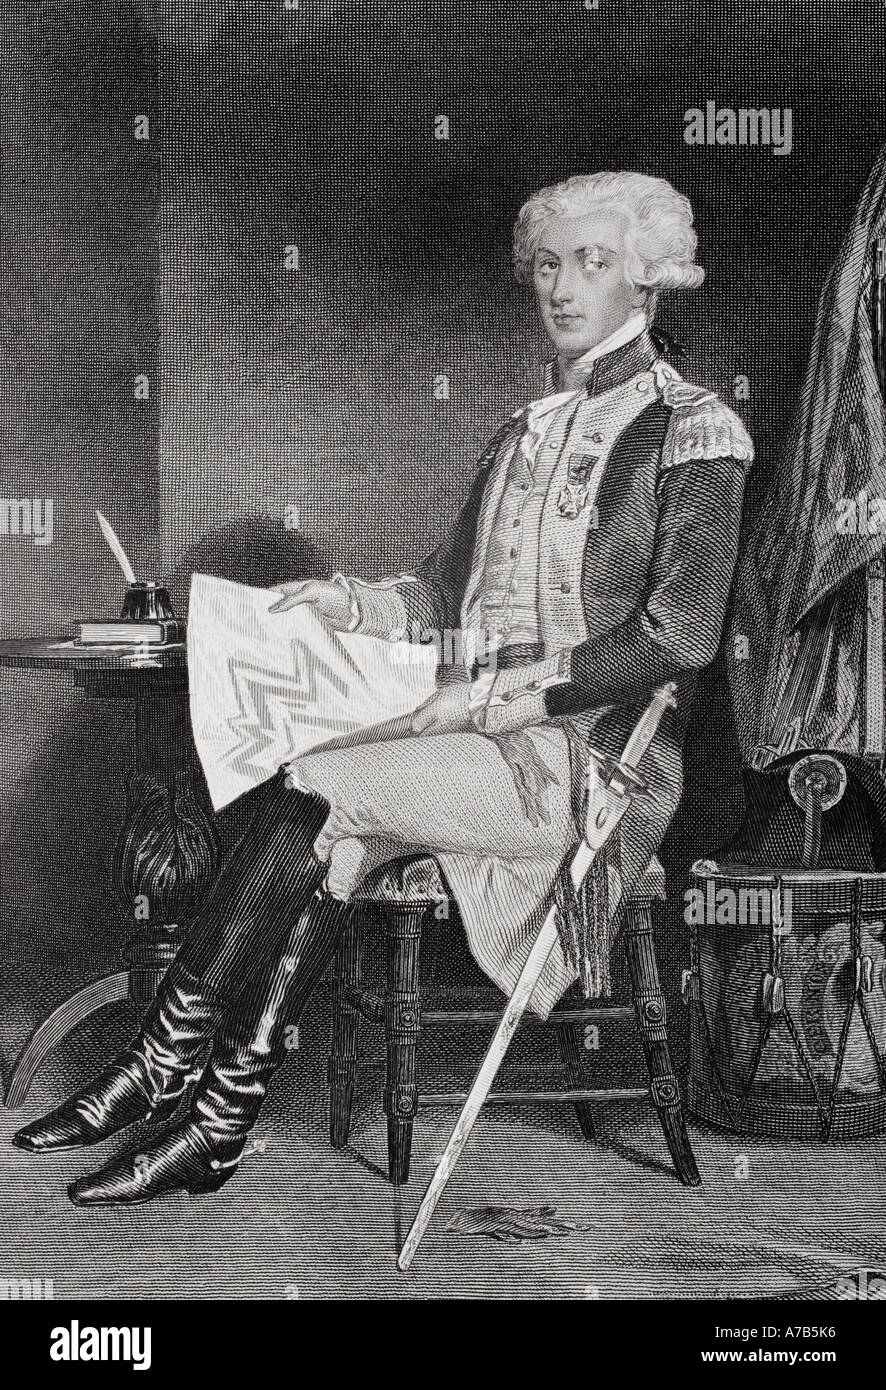 Marie-Joseph Paul Yves Roch Gilbert du Motier, Marquis de Lafayette, 1757 - 1834. Stock Photo